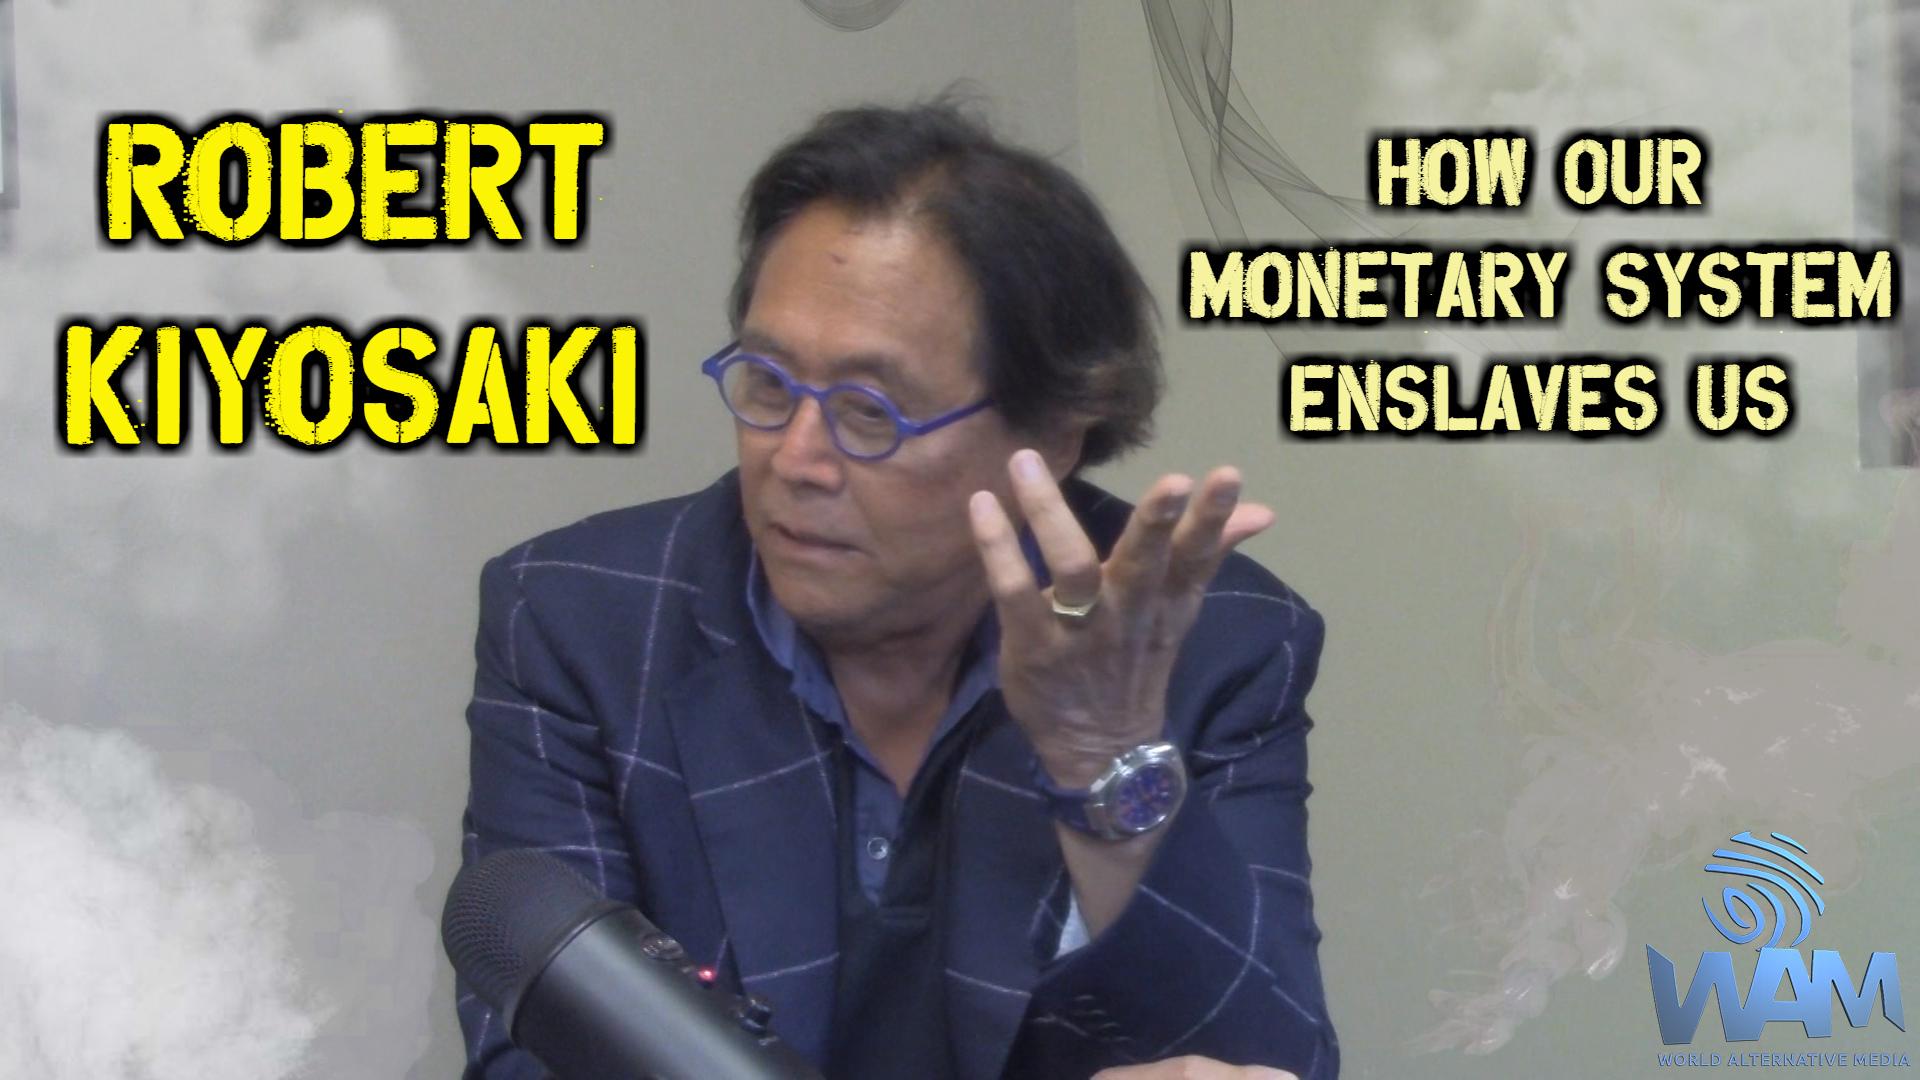 robert kiyosaki how our monetary system enslaves us thumbnail.png